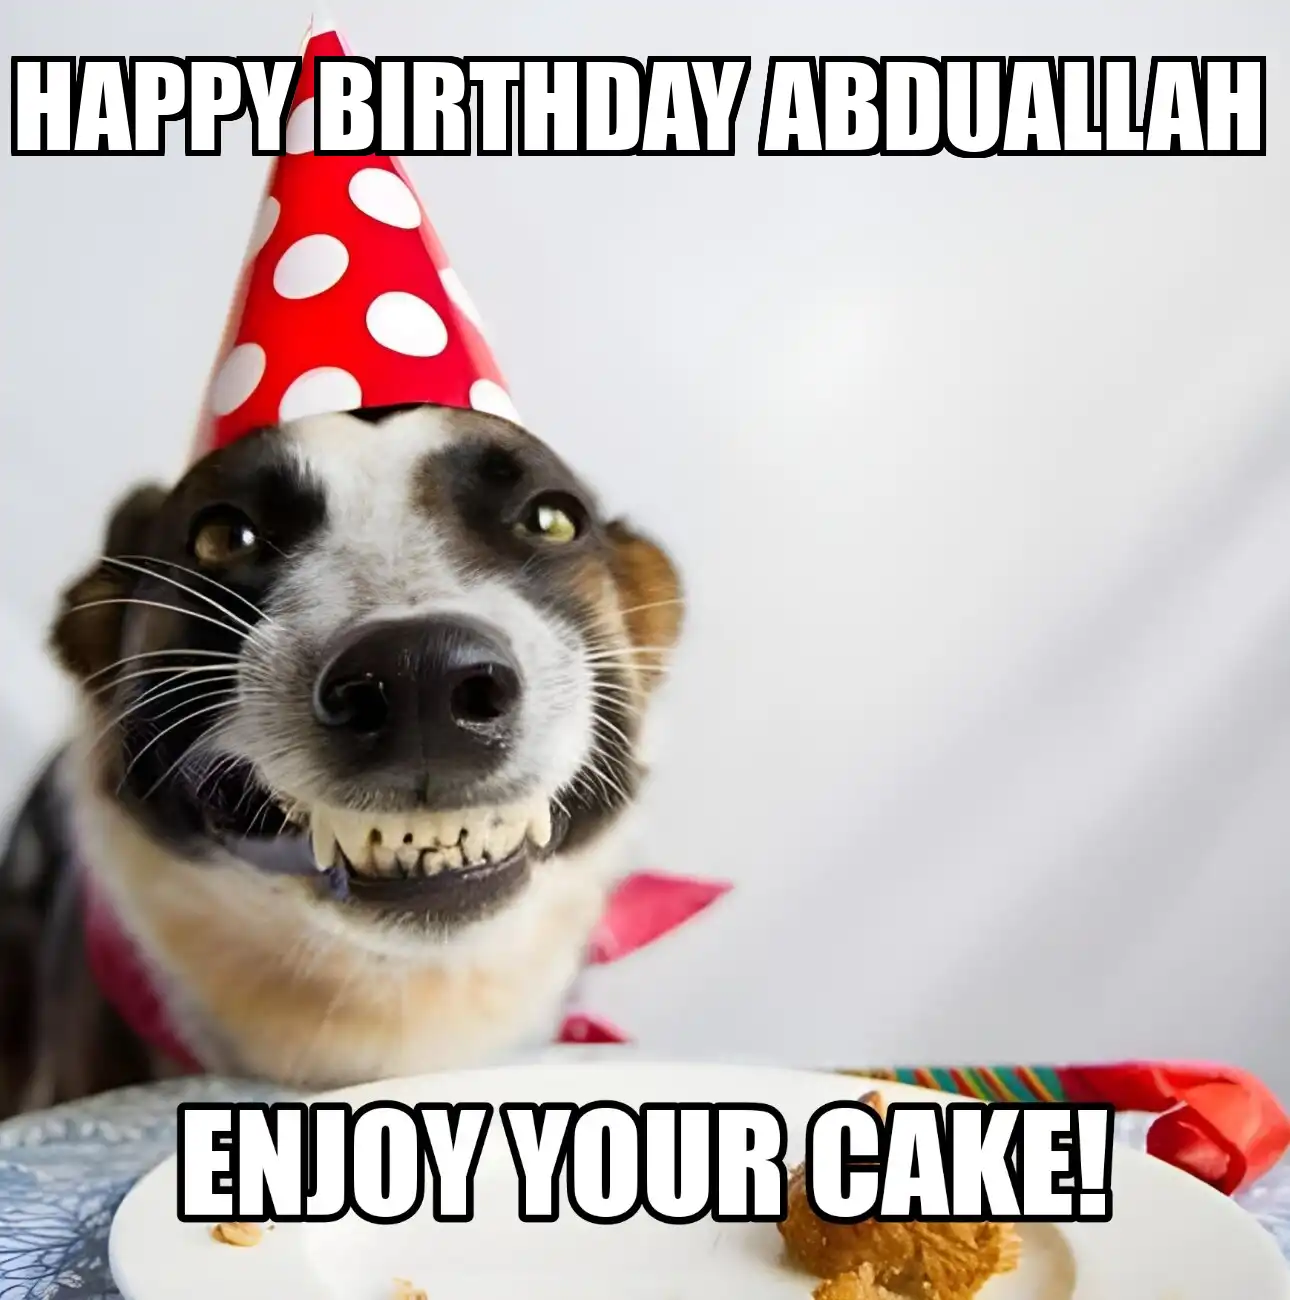 Happy Birthday Abduallah Enjoy Your Cake Dog Meme